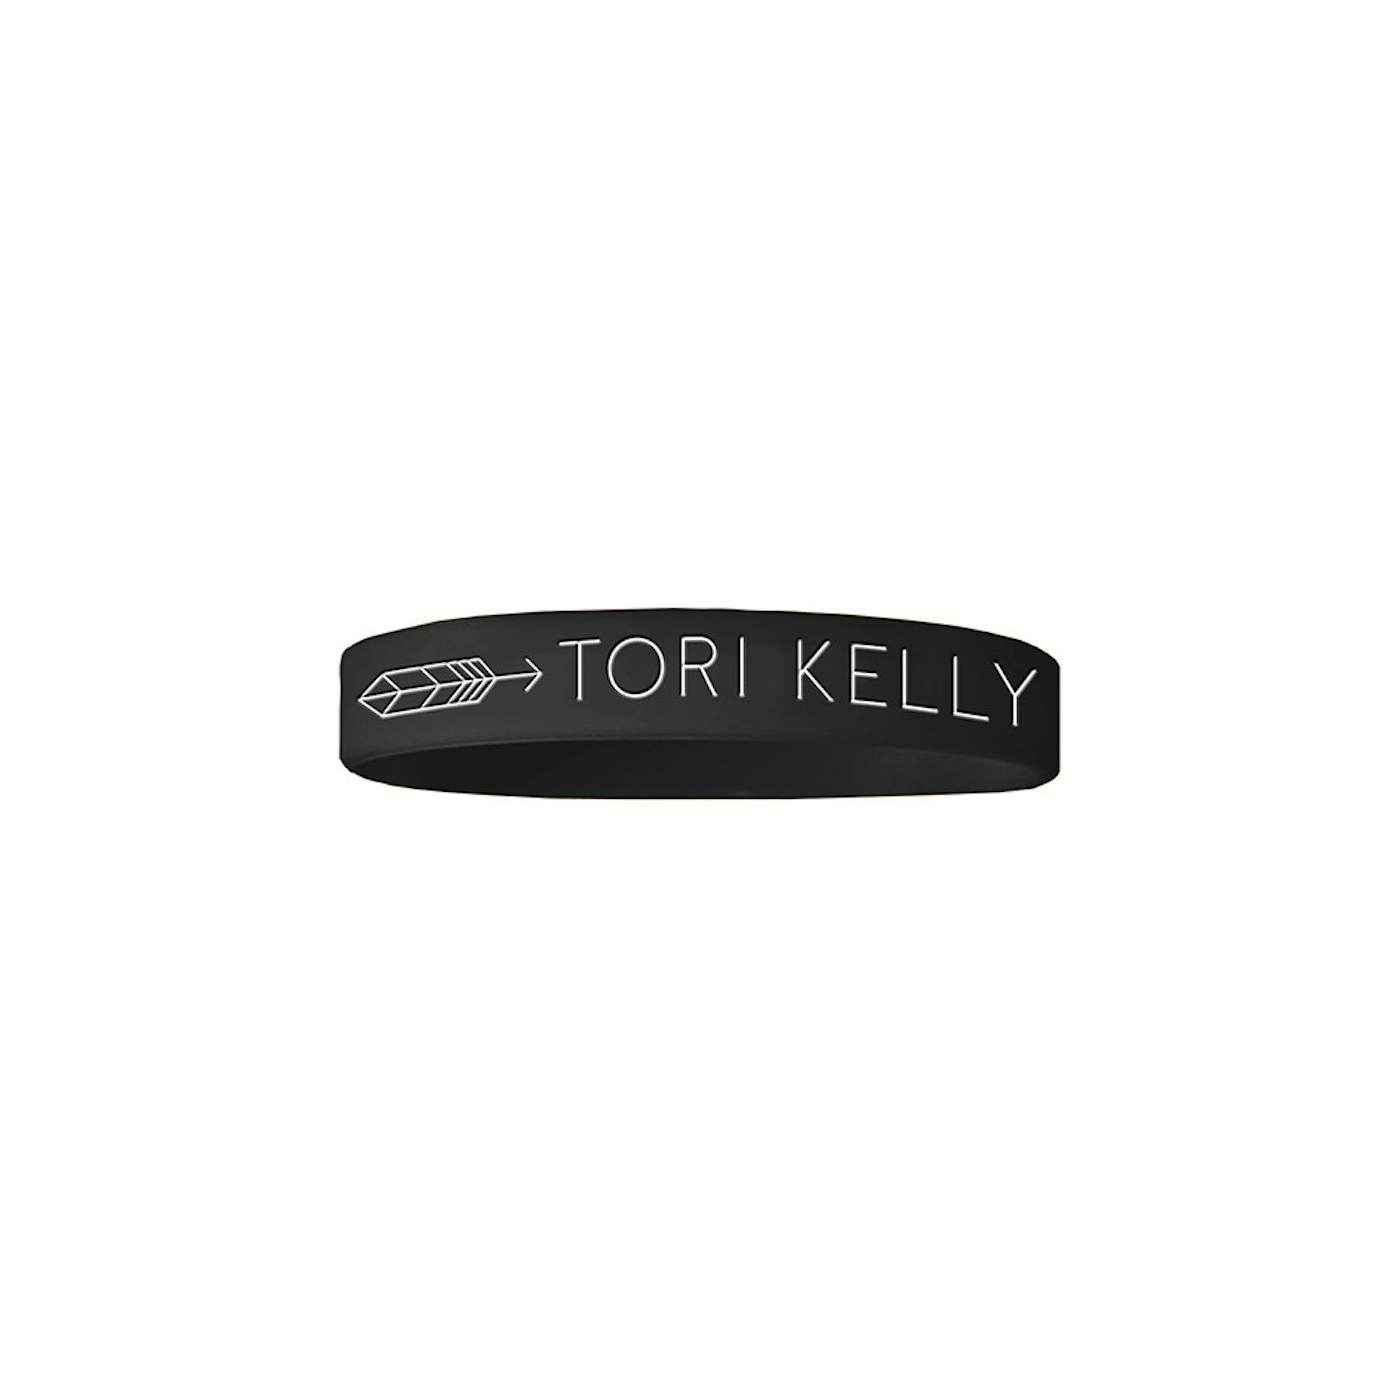 Tori Kelly Wristband